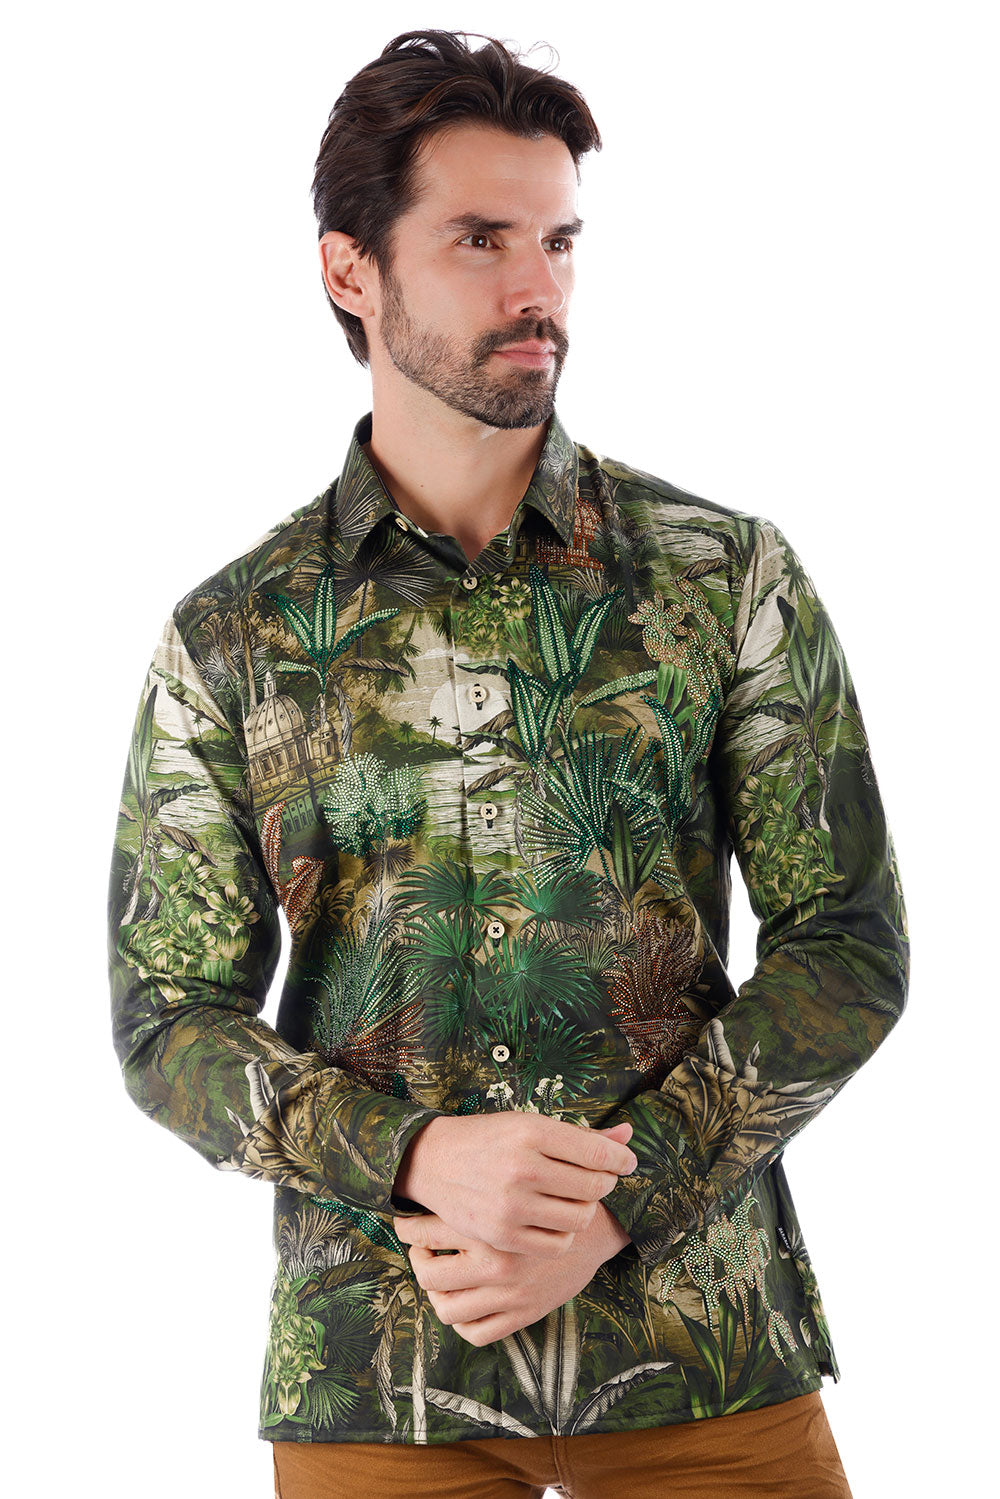 BARABAS Men's Rhinestone Floral Long Sleeve Shirts 3SPR425 Green